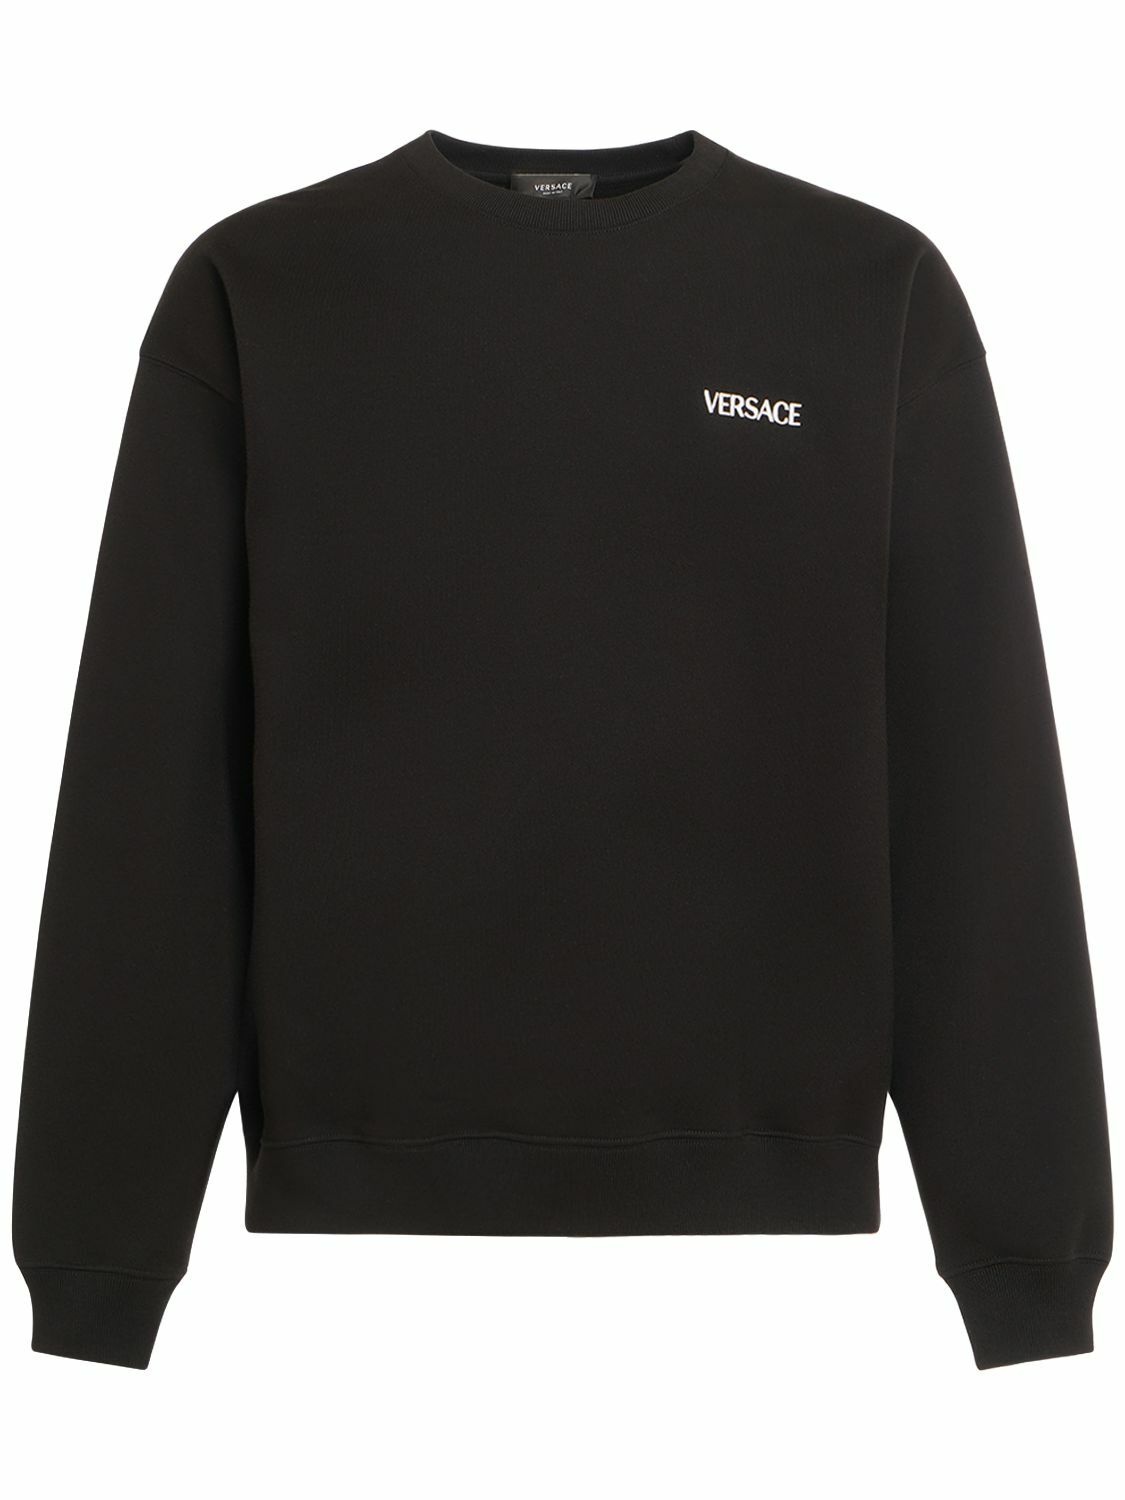 Photo: VERSACE - Versace Hills Printed Sweatshirt